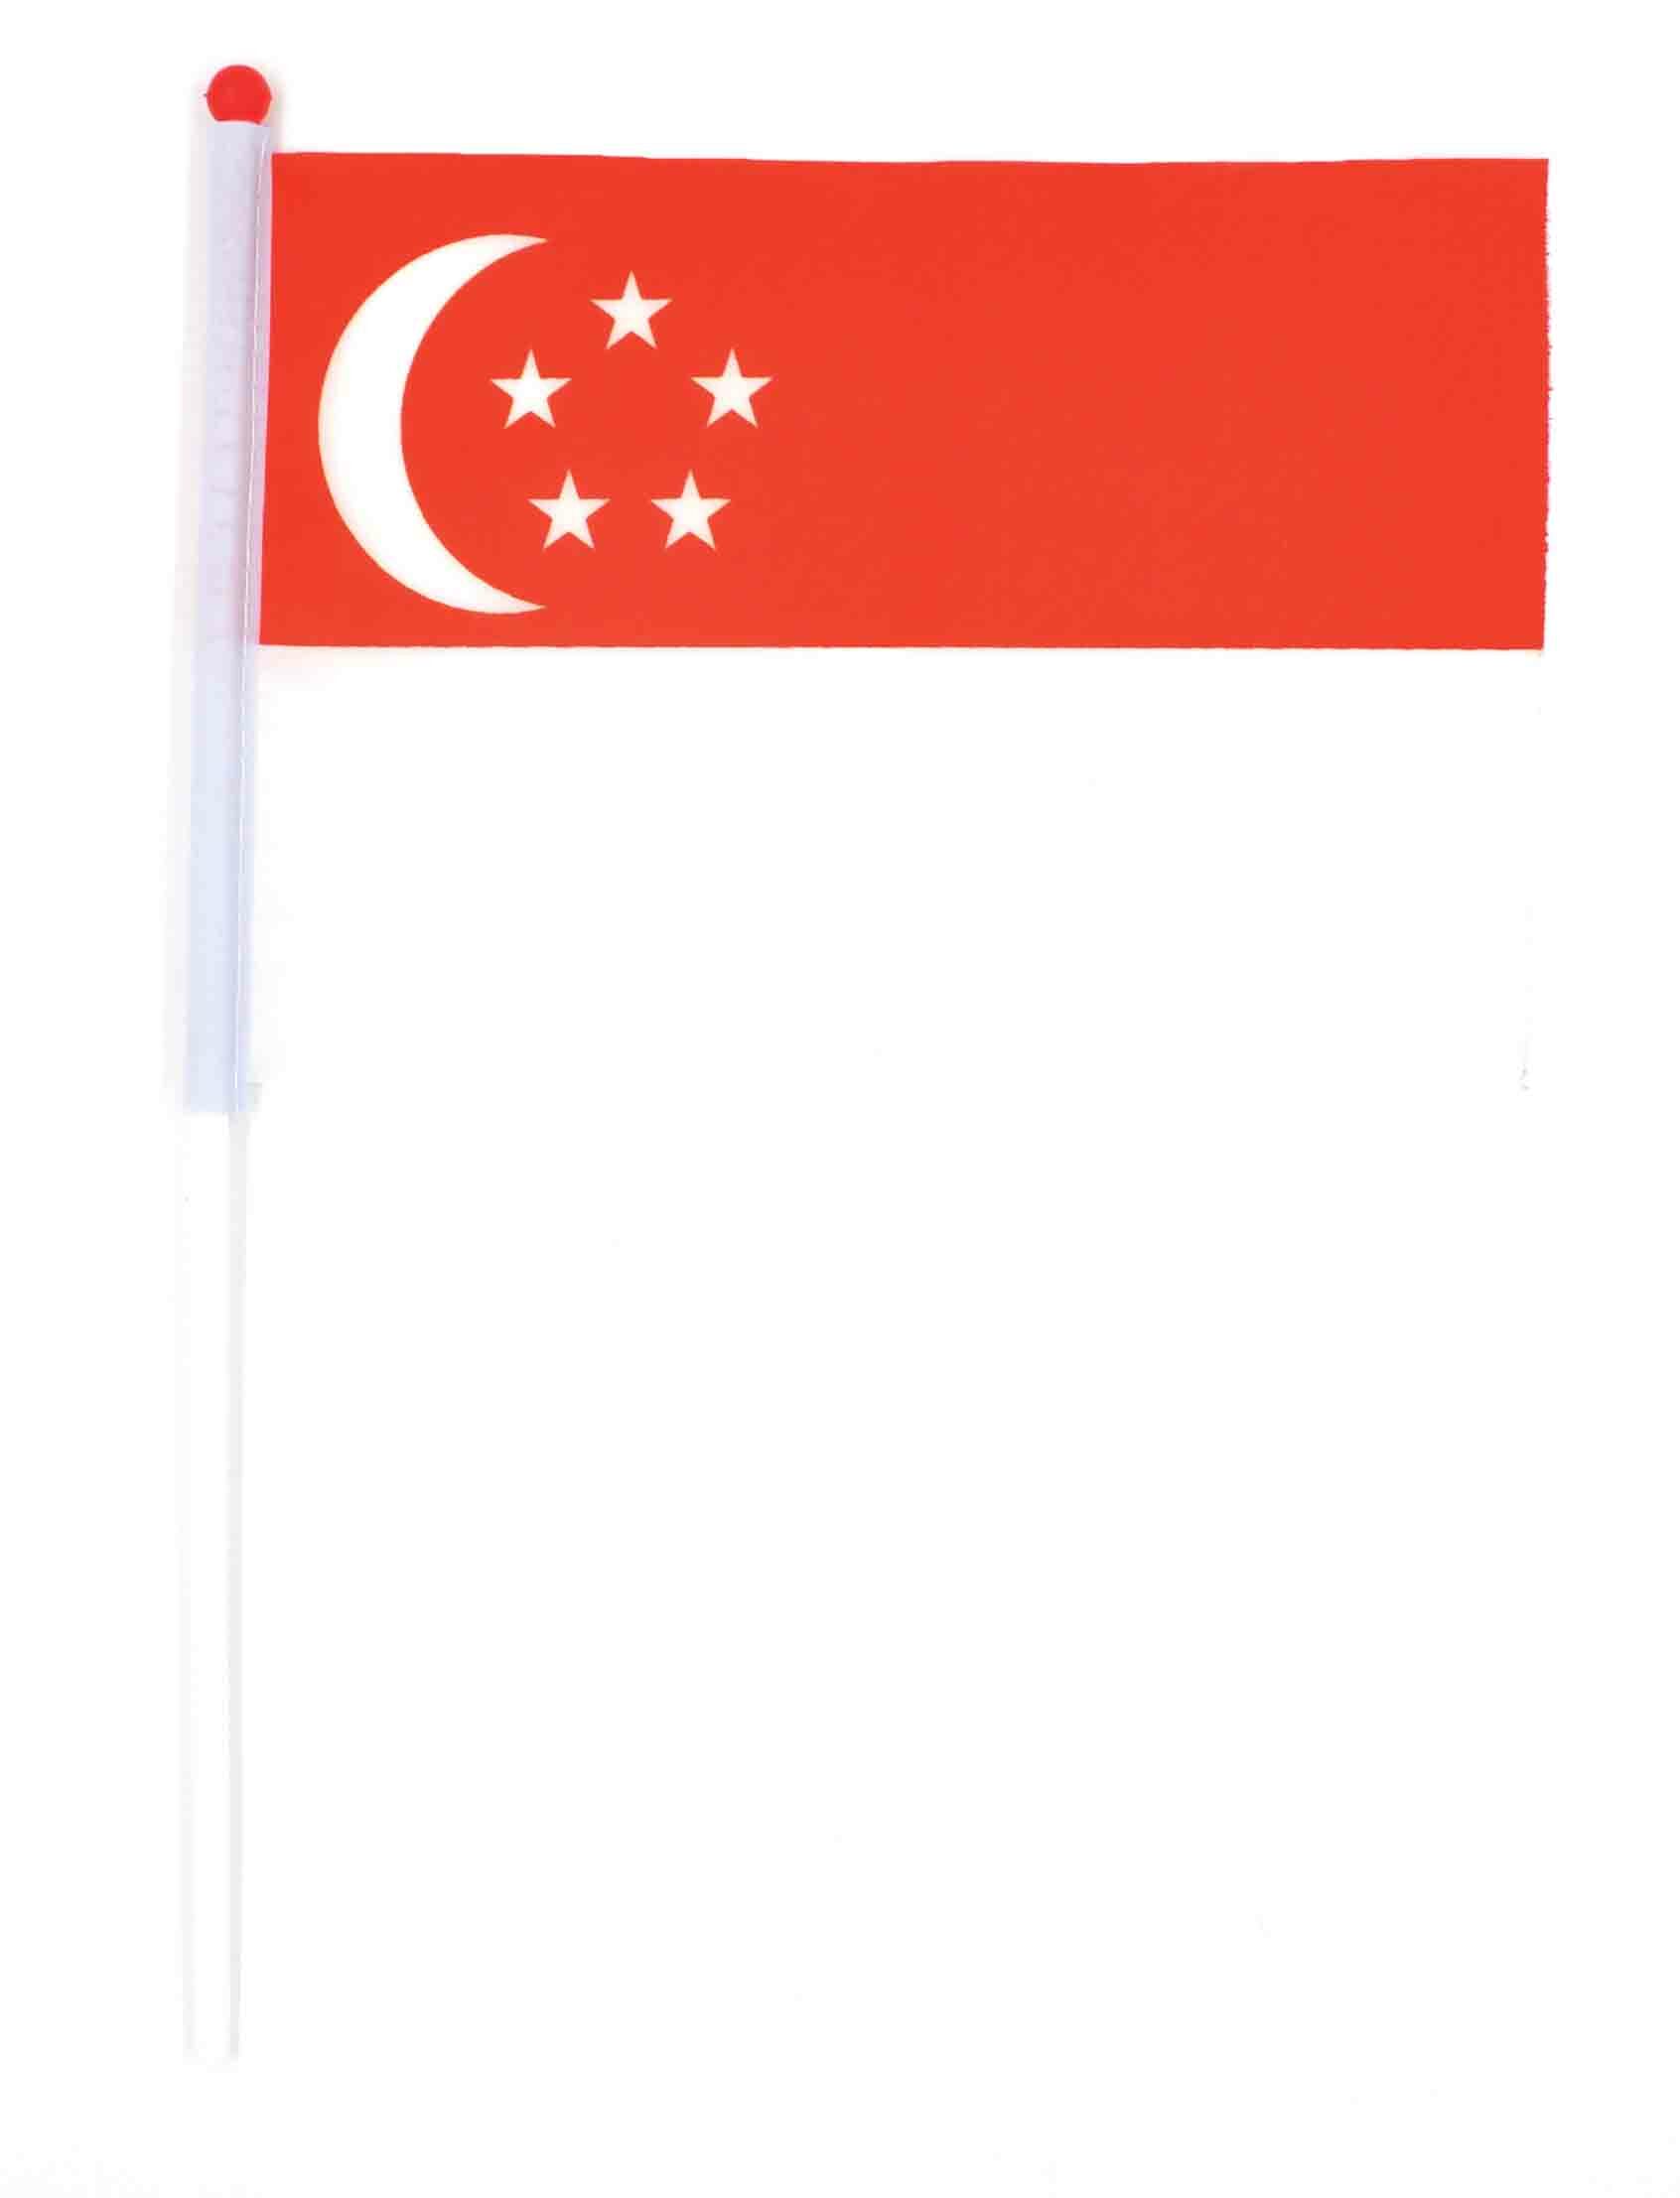 SG flag